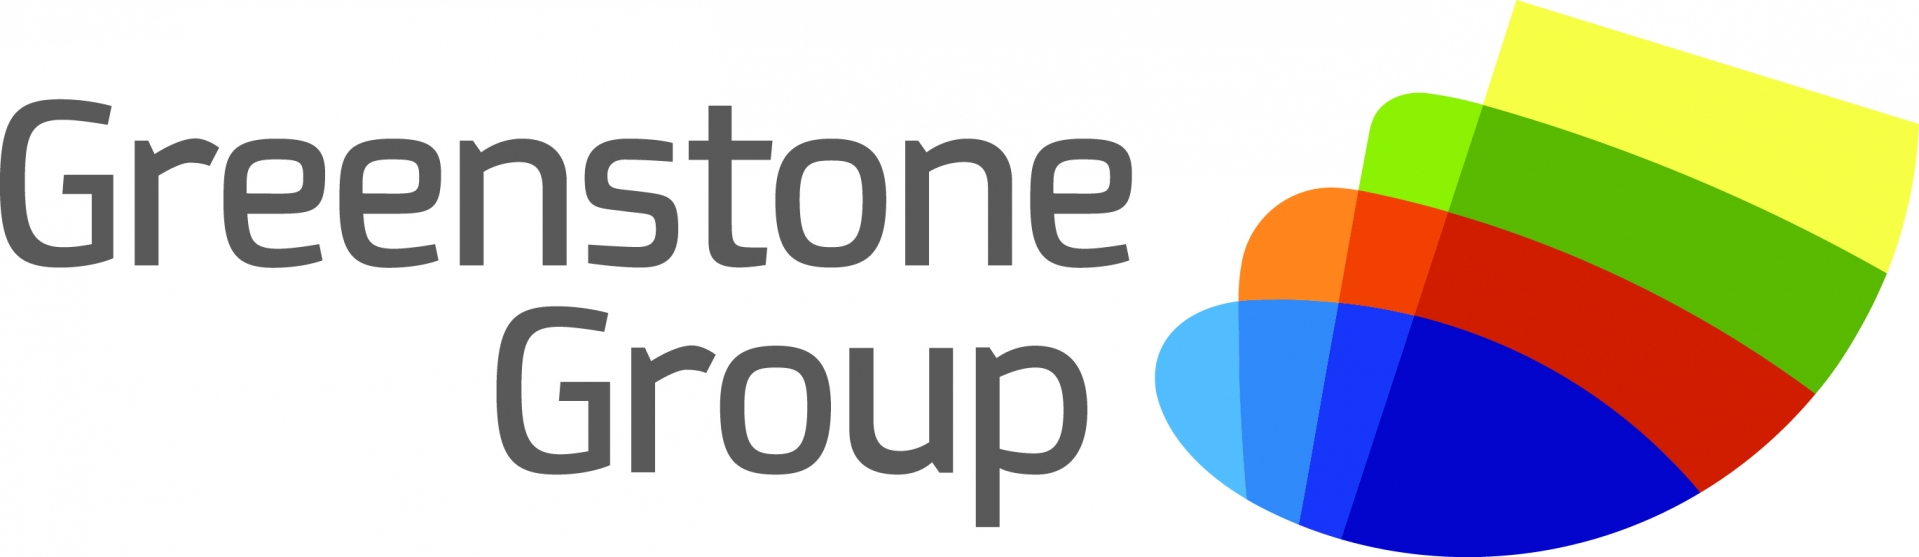 Greenstone Group.jpeg